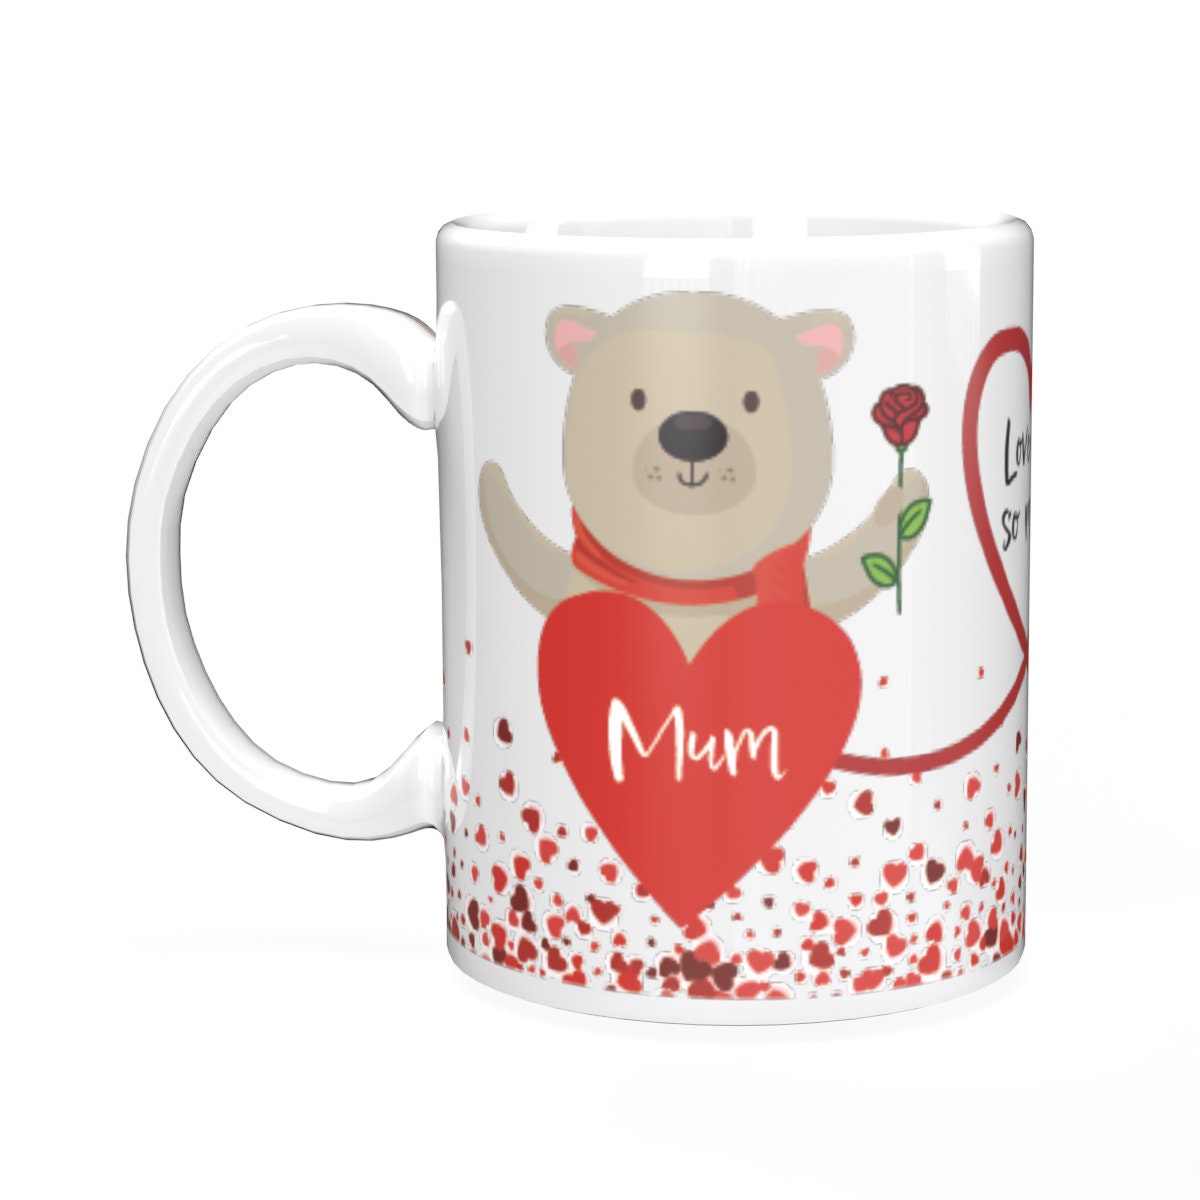 Bear love you so much personalised mug